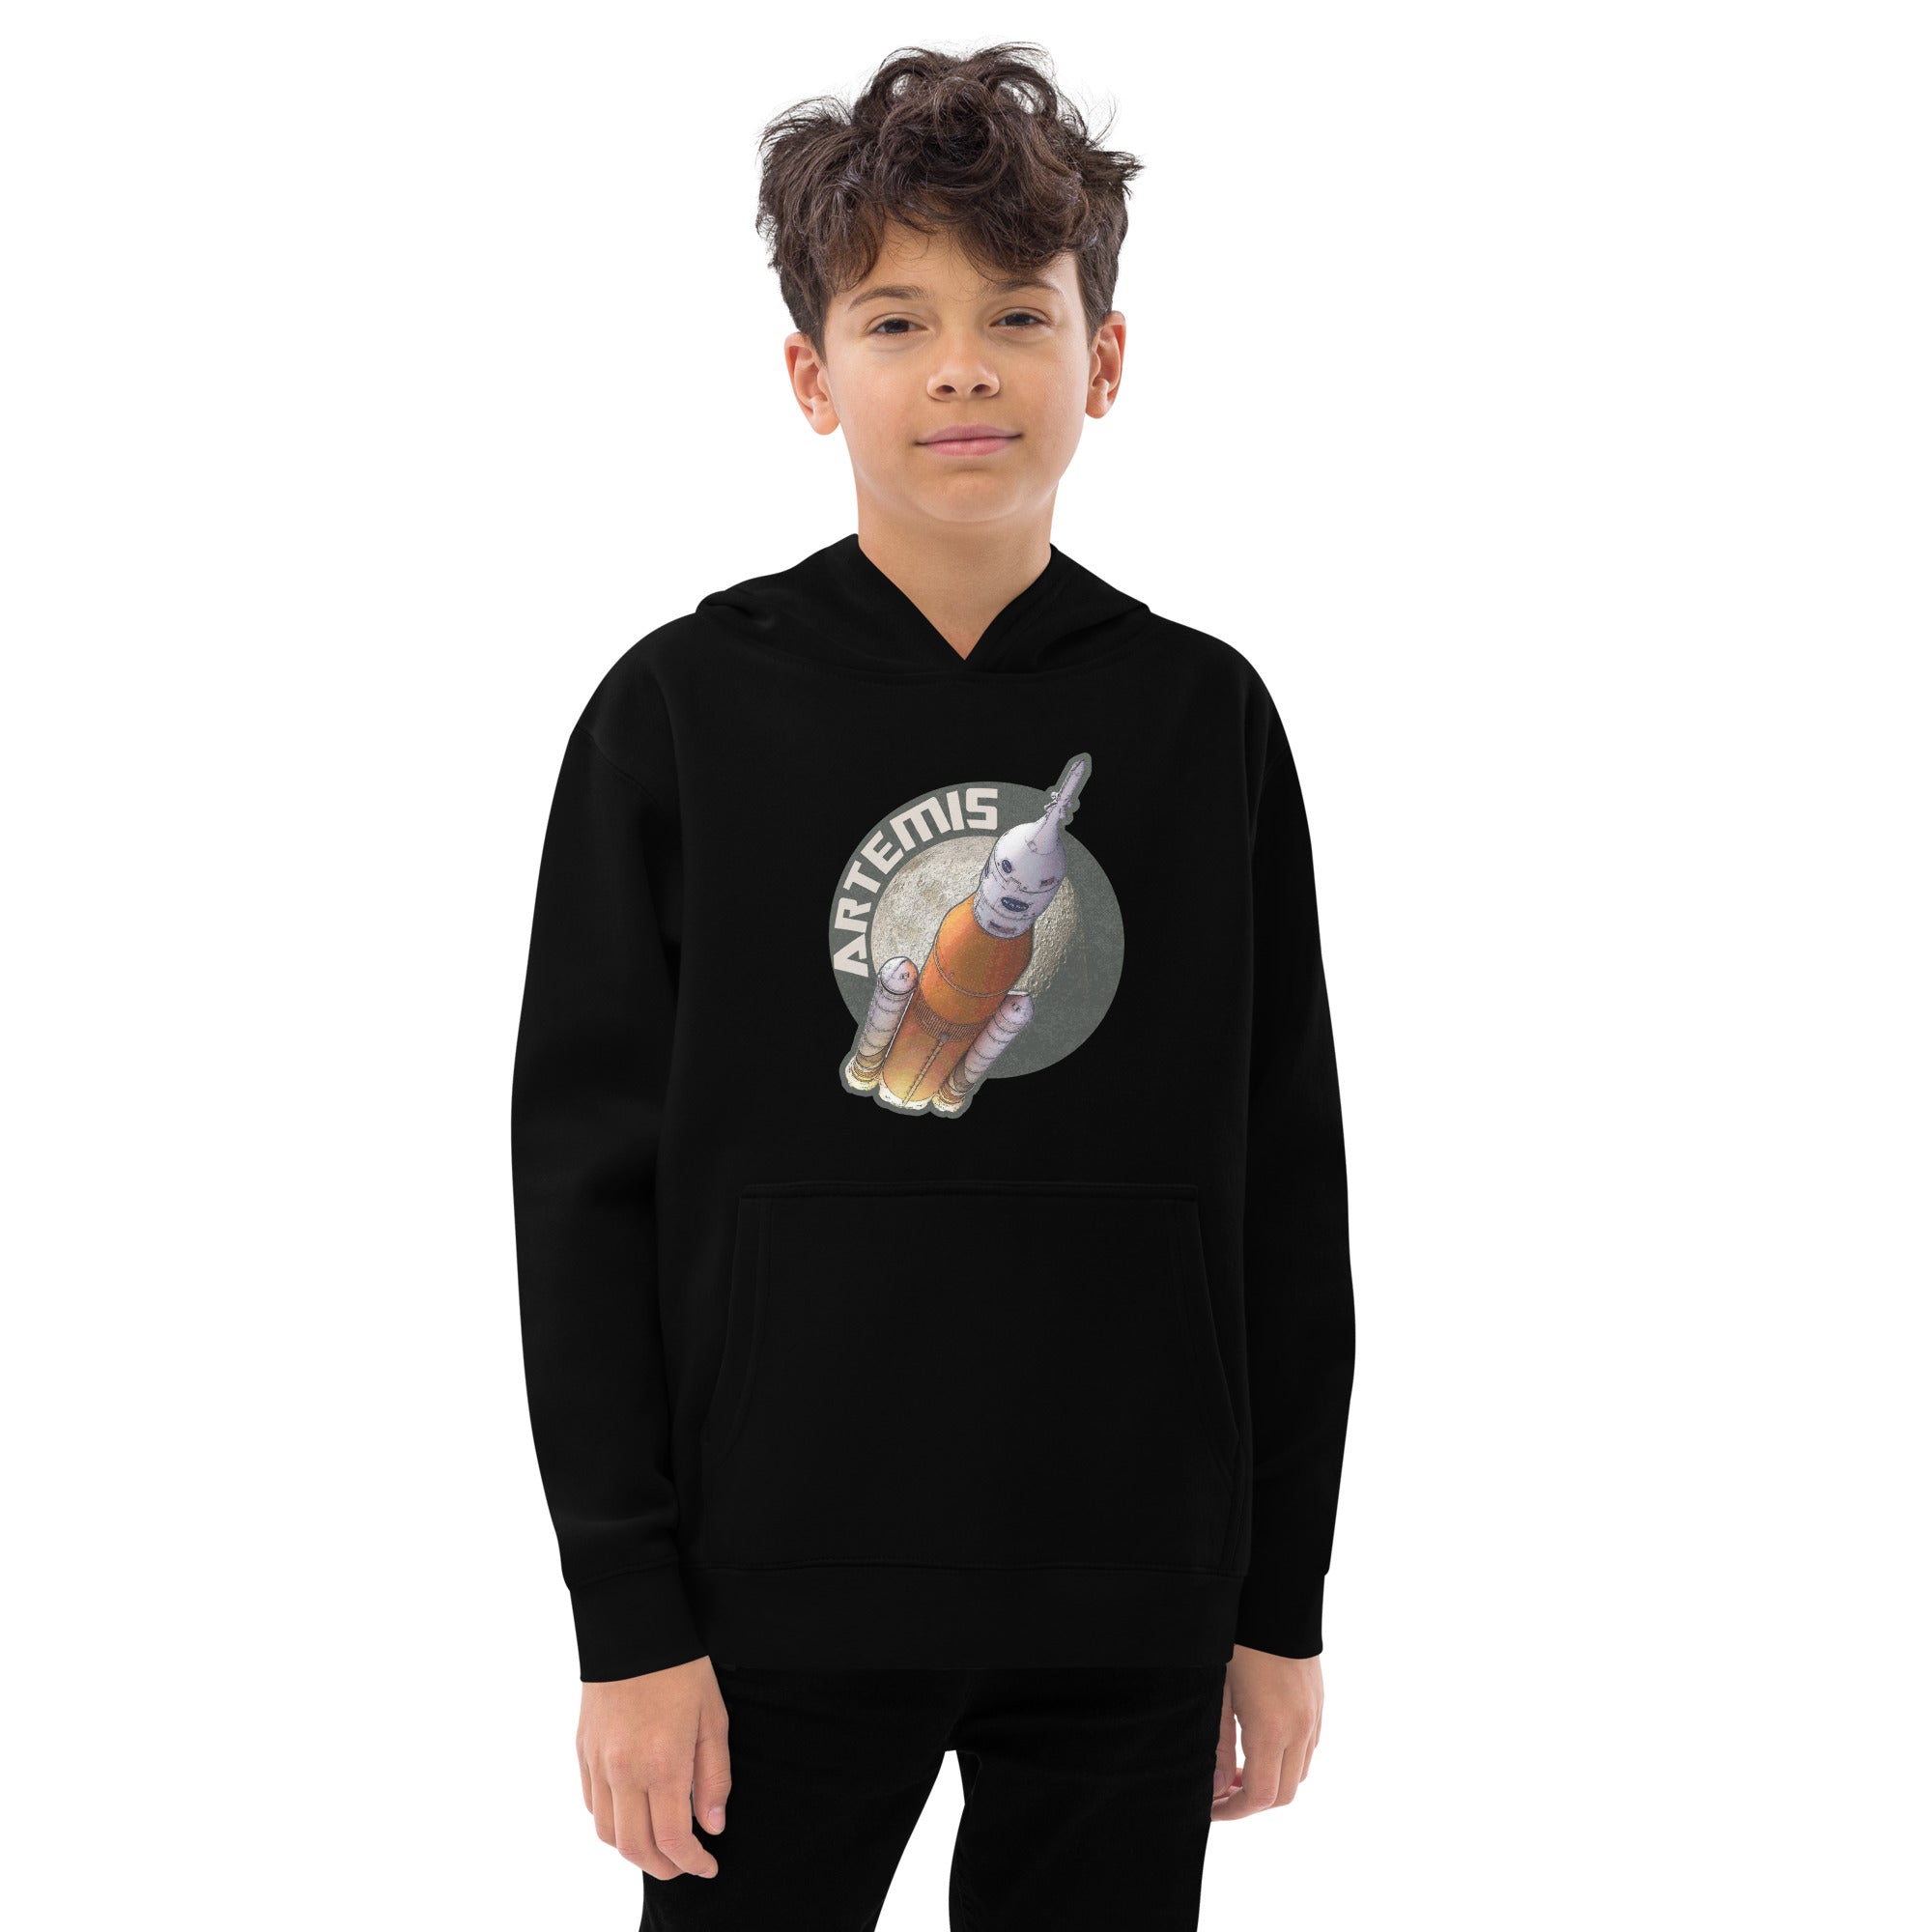 Artemis SLS Rocket Kids fleece hoodie - The Space Store